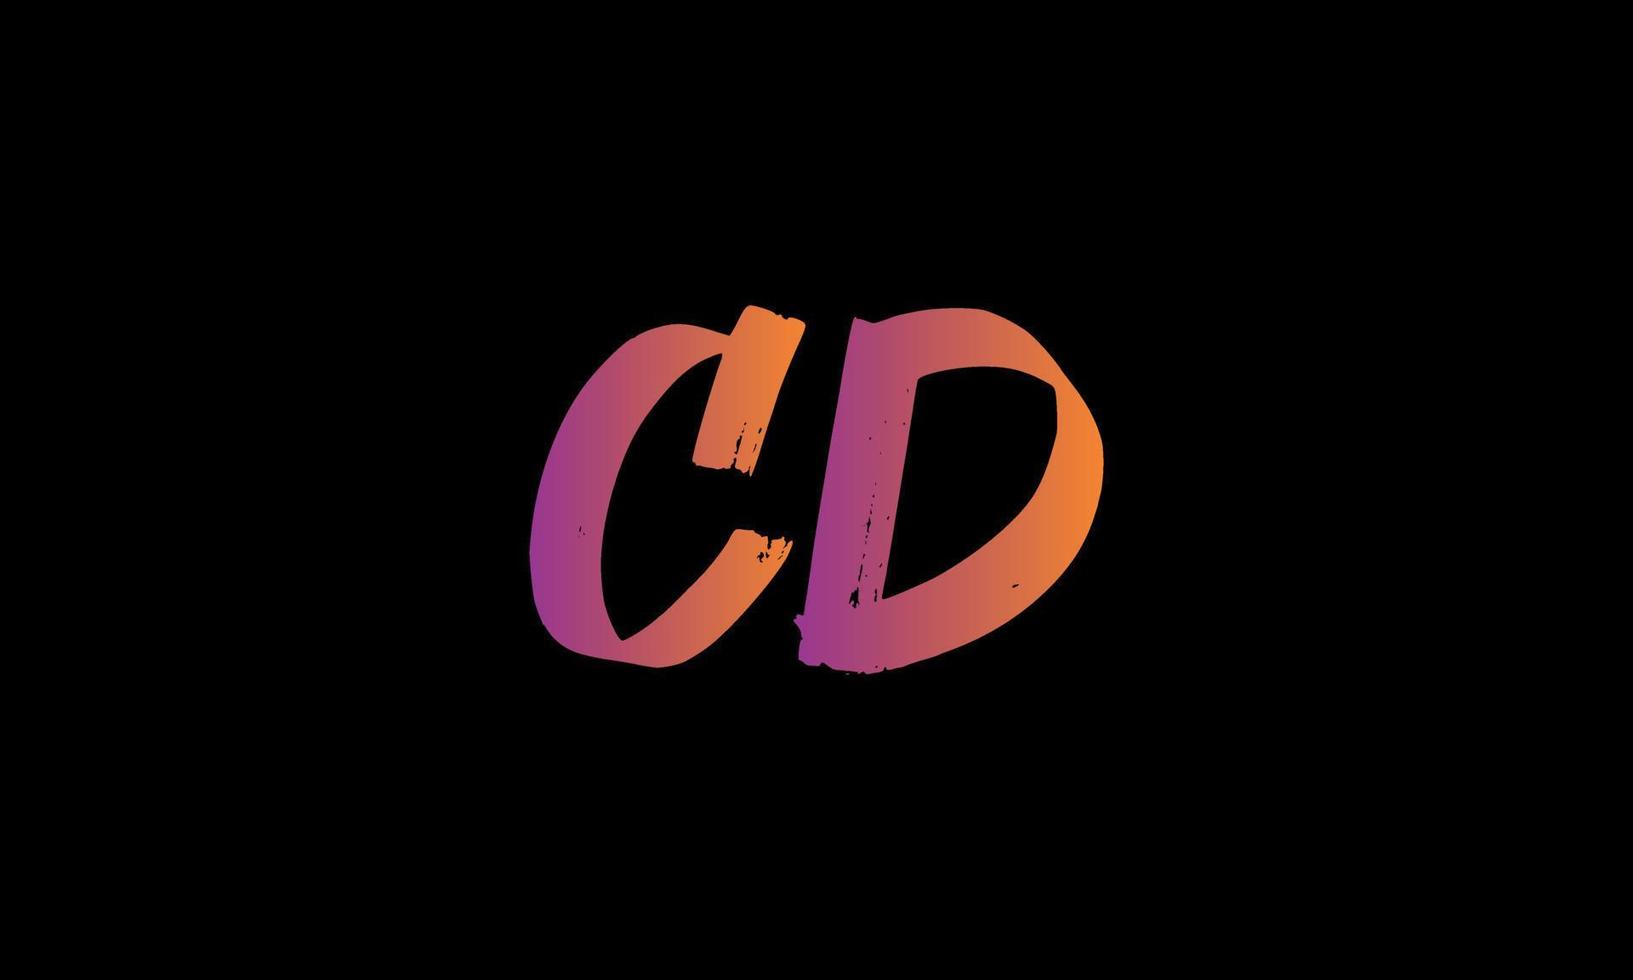 anfangsbuchstabe cd-logo. Kostenlose Vektorvorlage für CD-Bürstenbrief-Logo-Design. vektor